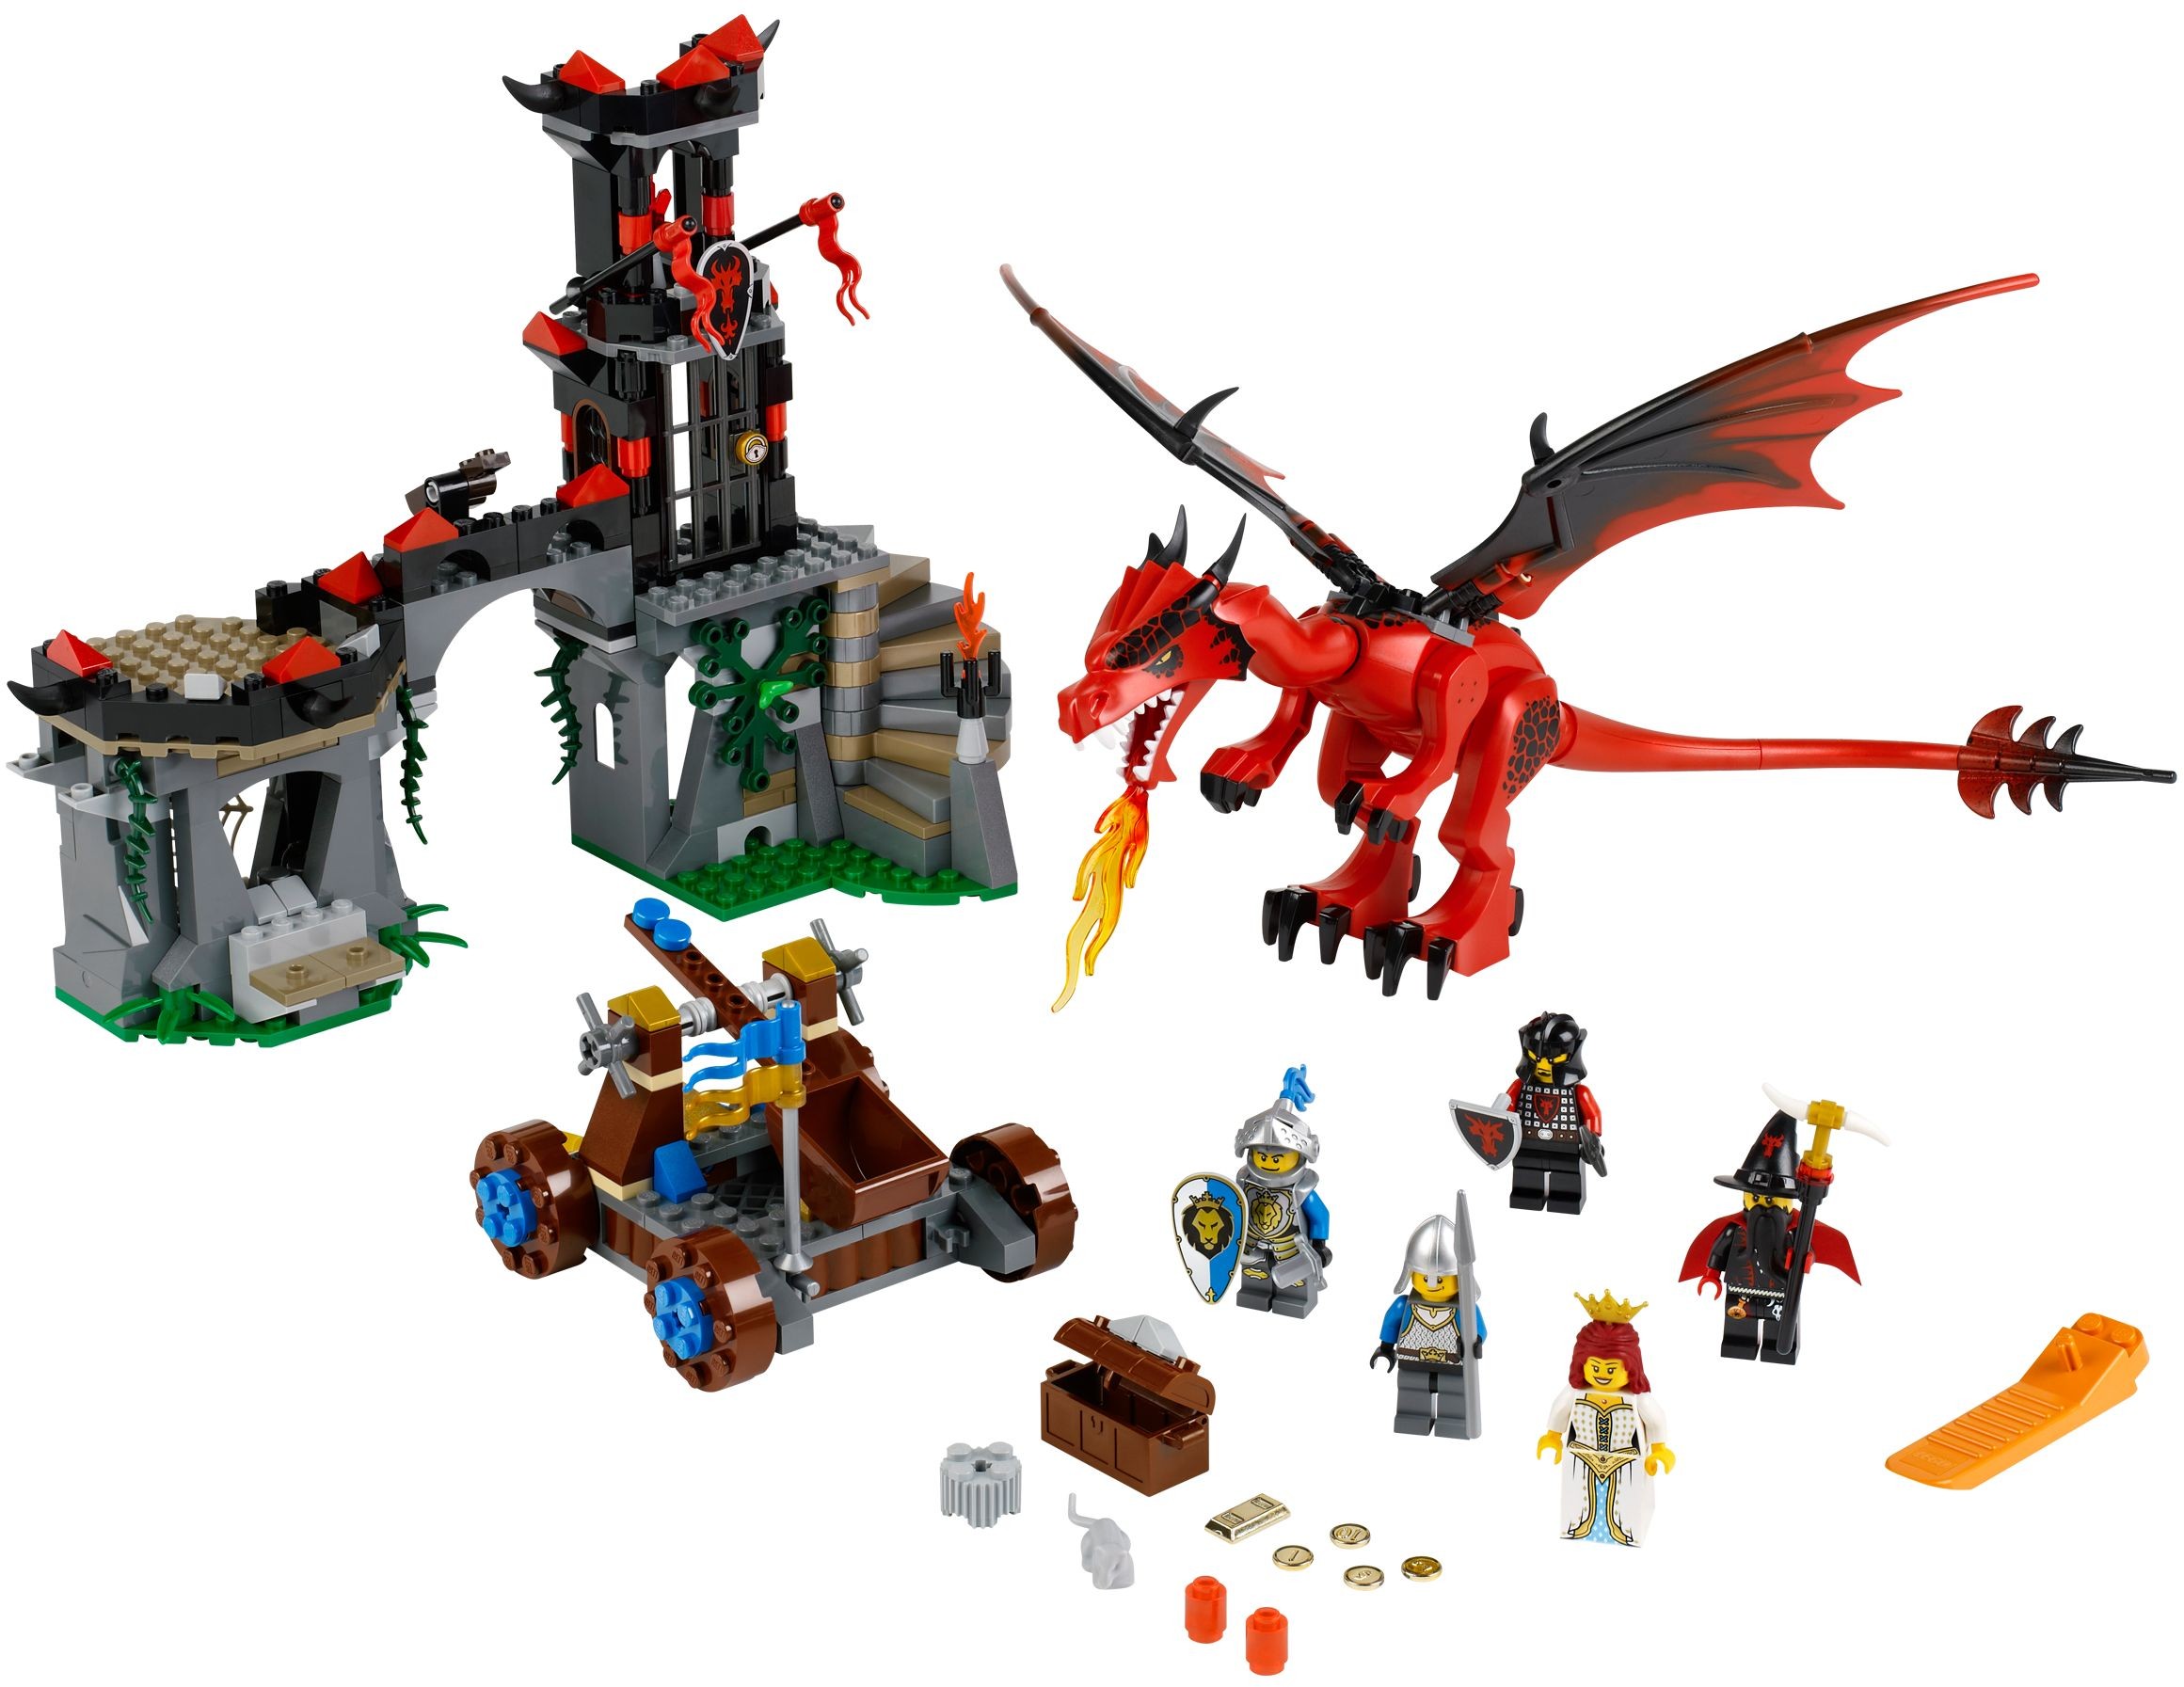 Subtropisch Volharding Jurassic Park Koop LEGO Castle - Dragon Mountain (lego 70403)